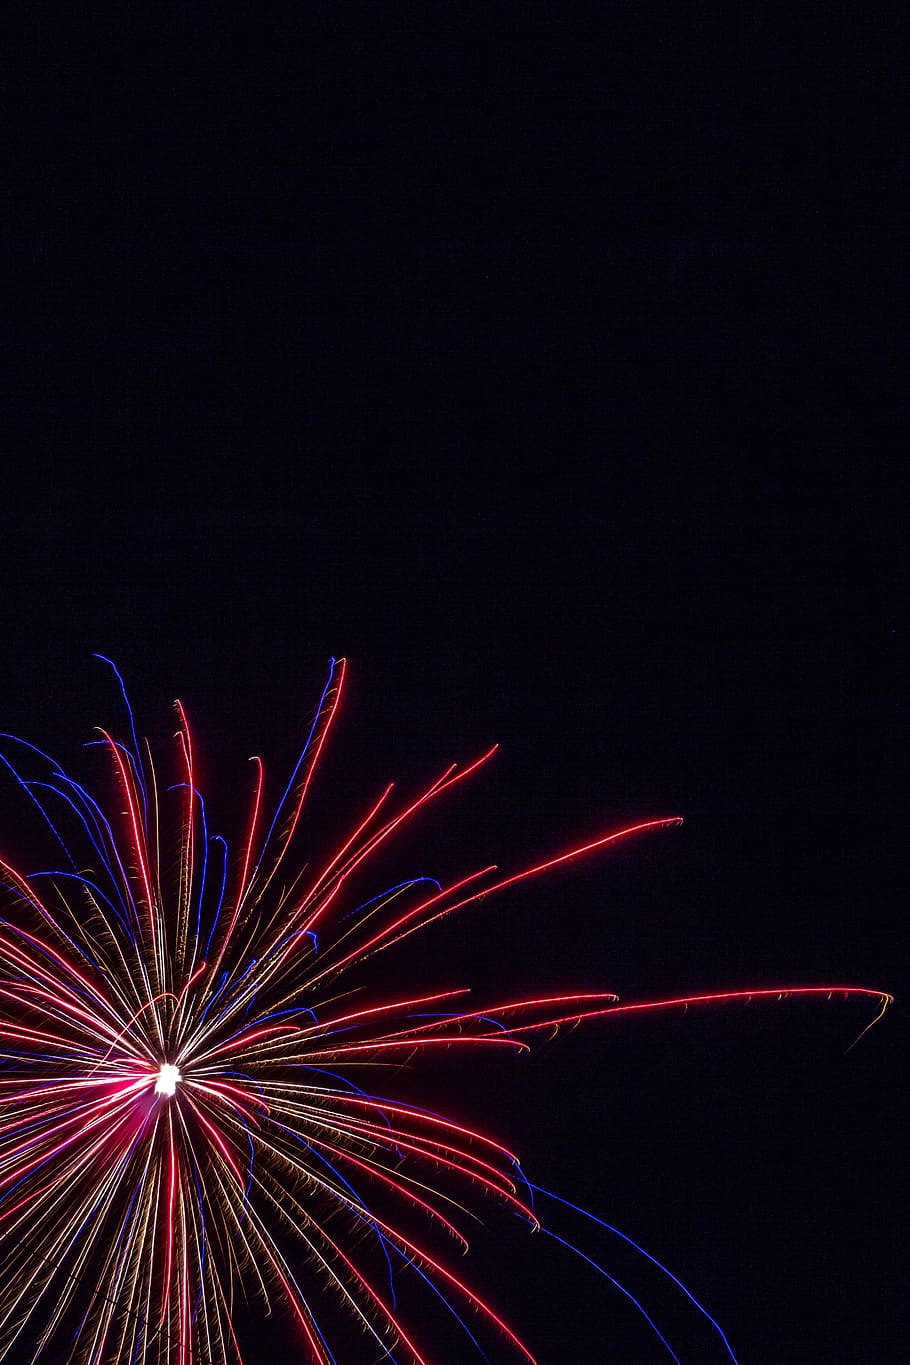 timelapse photo, fireworks, starburst, celebration, 4th july, decoration, burst, star, sparkle, explosion